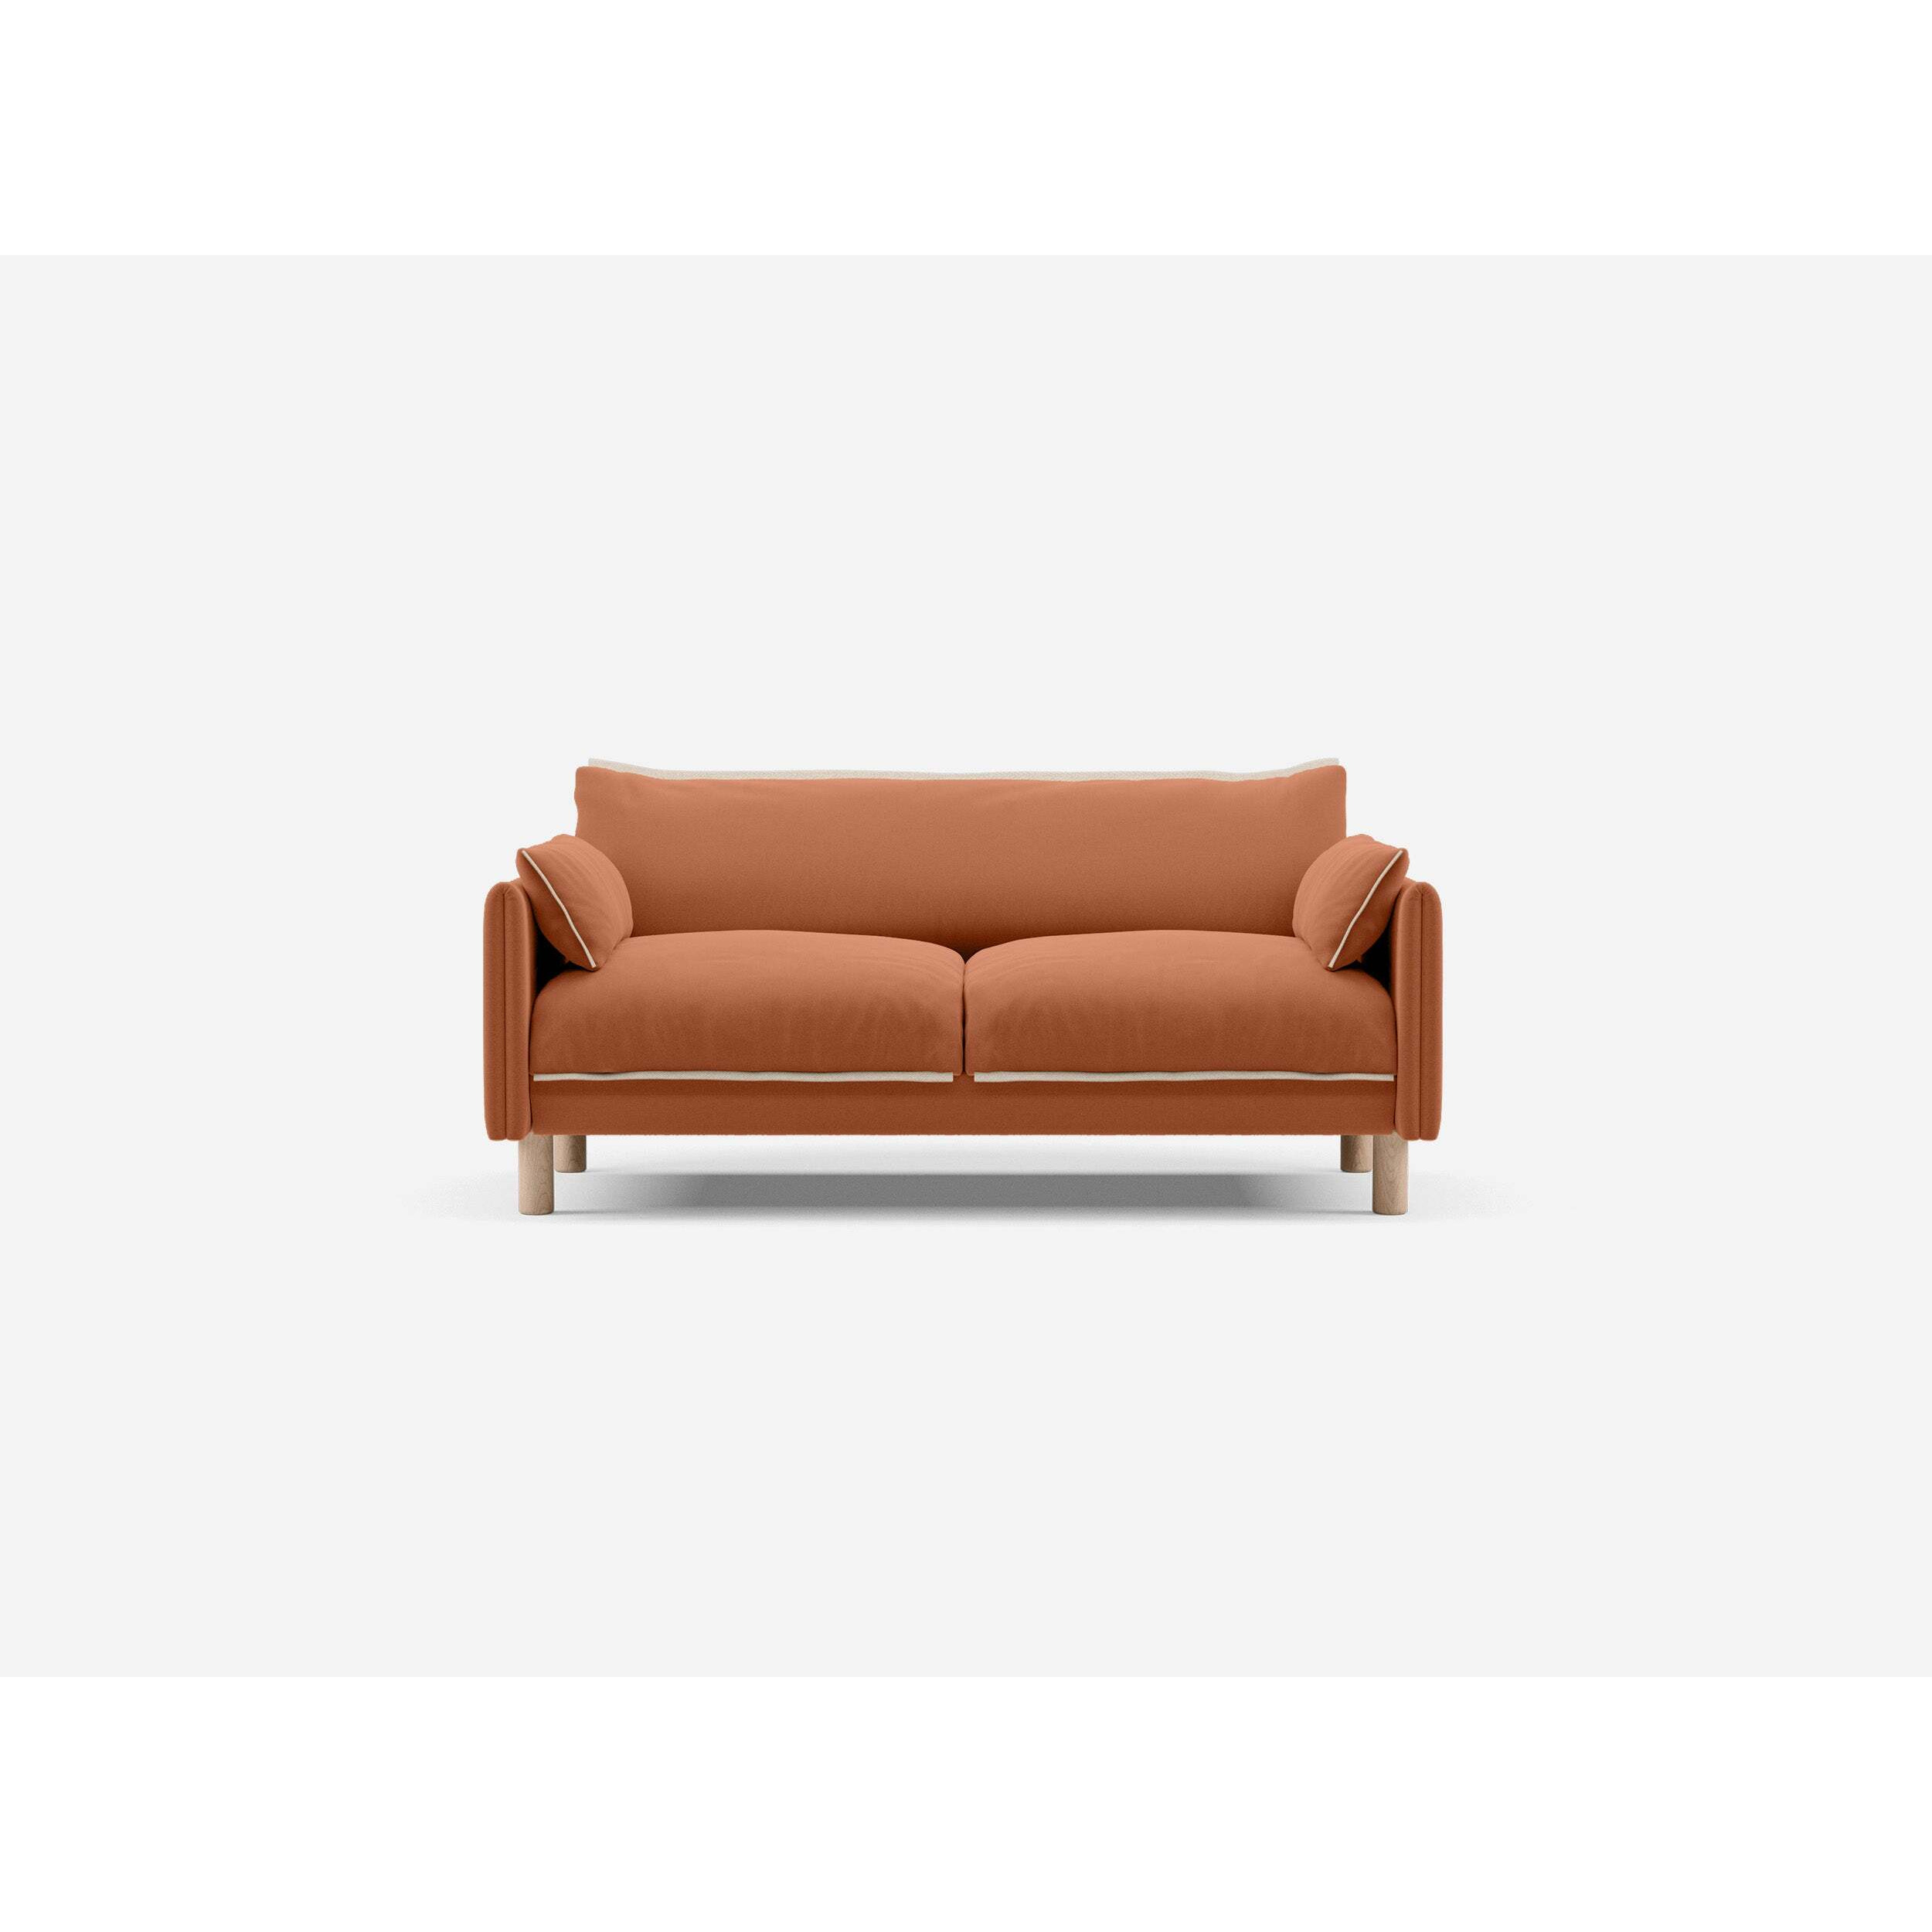 2 Seater Sofa - Henna Cotton - image 1